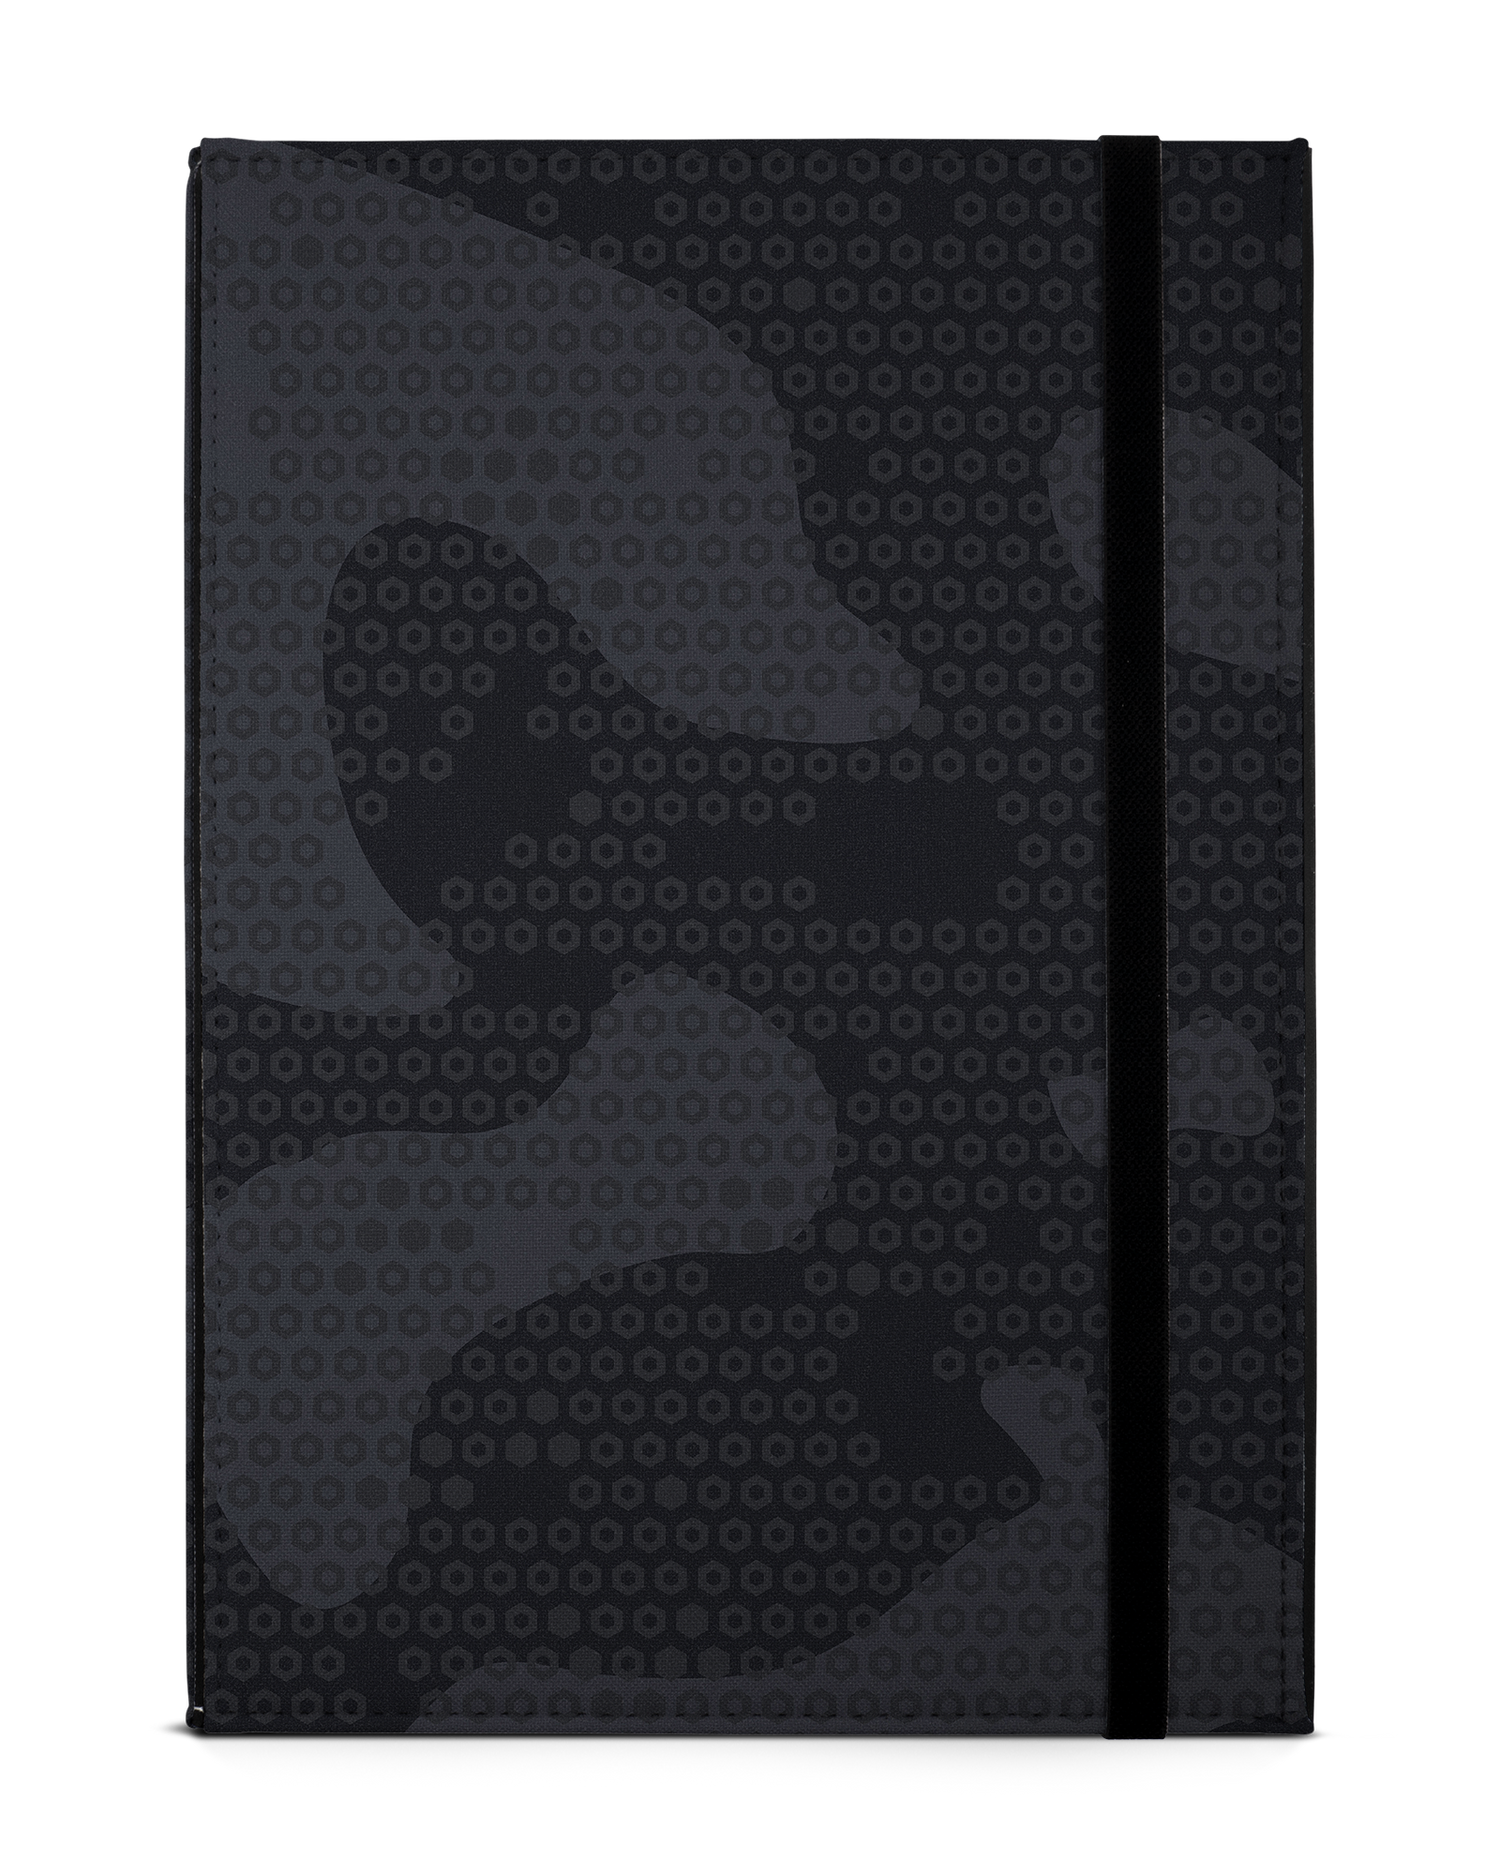 Spec Ops Dark Tablet Case M: Front View